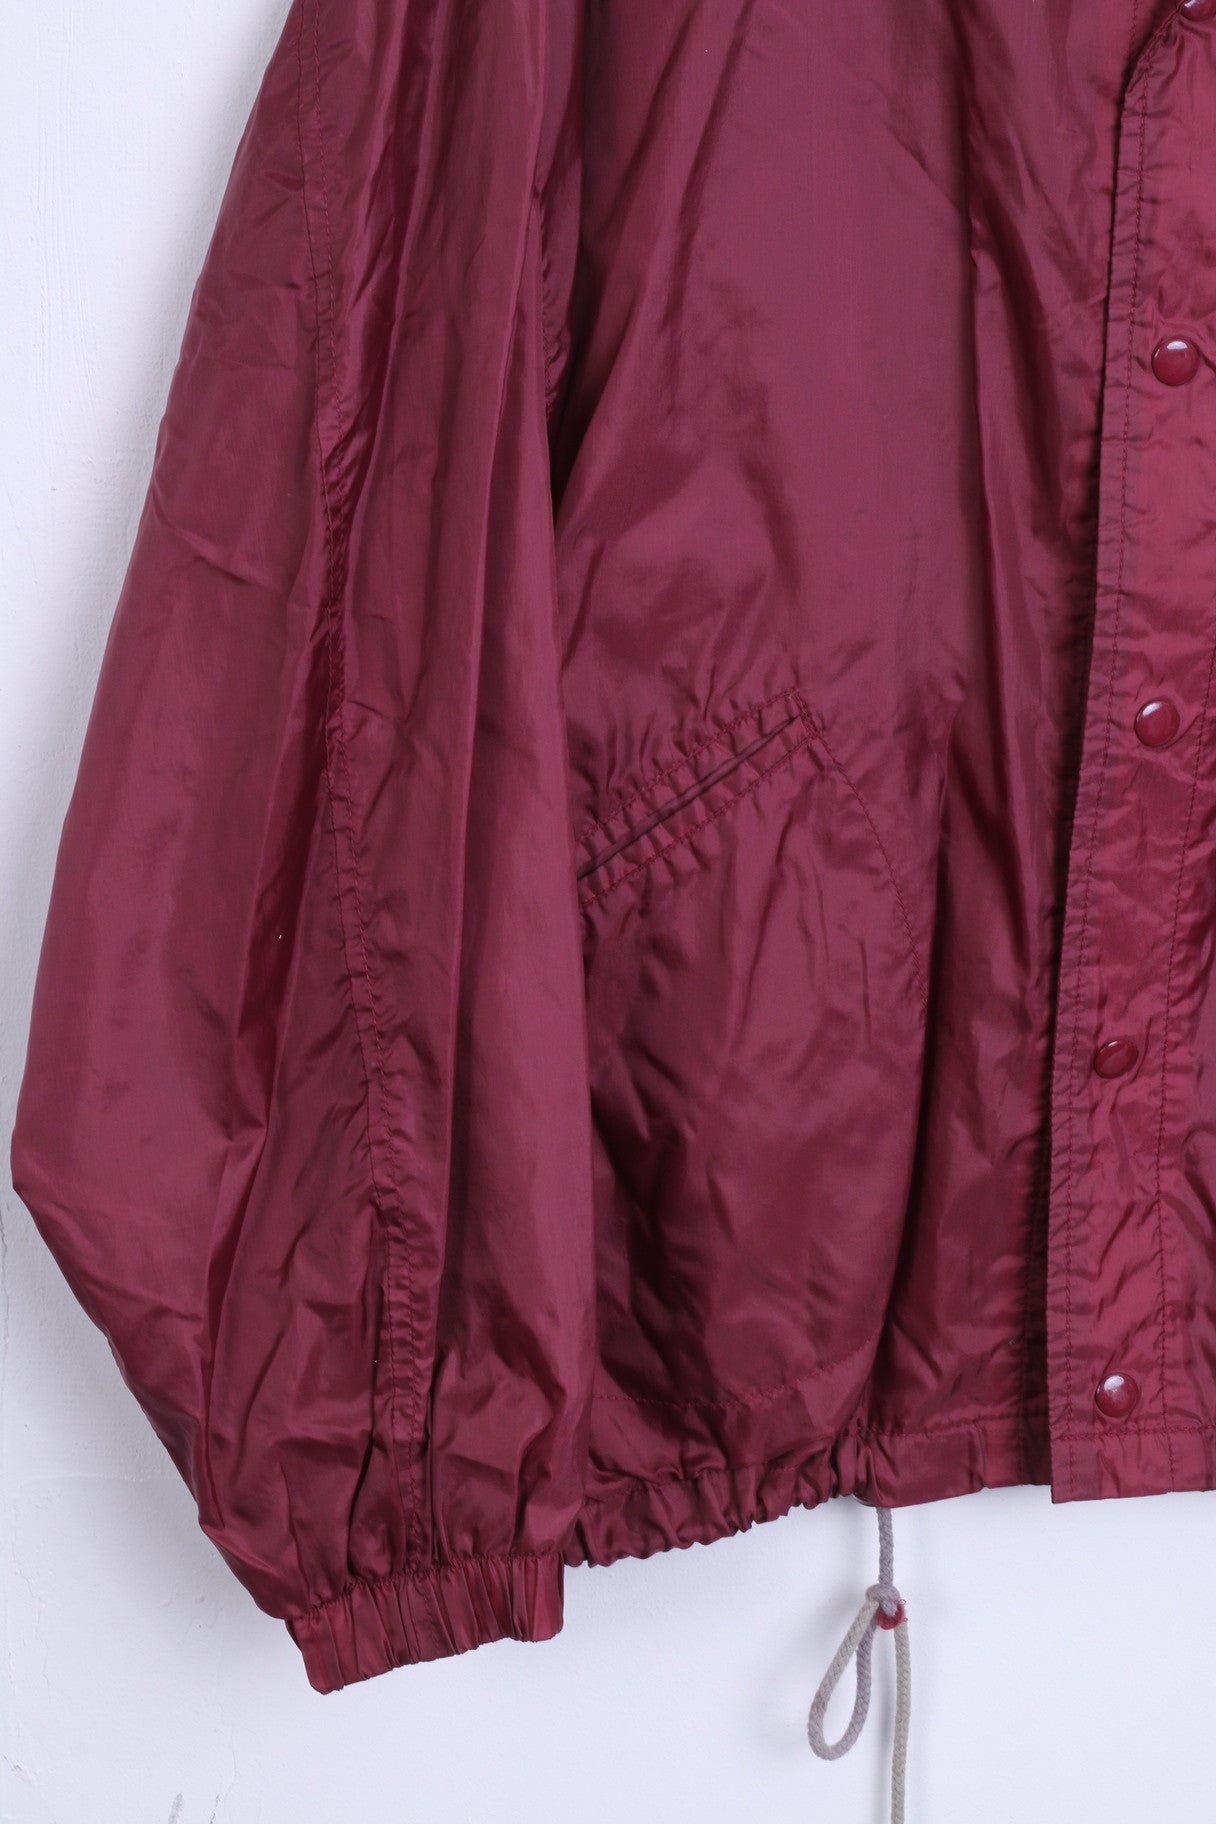 RESCUE Sports Mens XL Jacket Outdoor Nylon Waterproof Maroon - RetrospectClothes